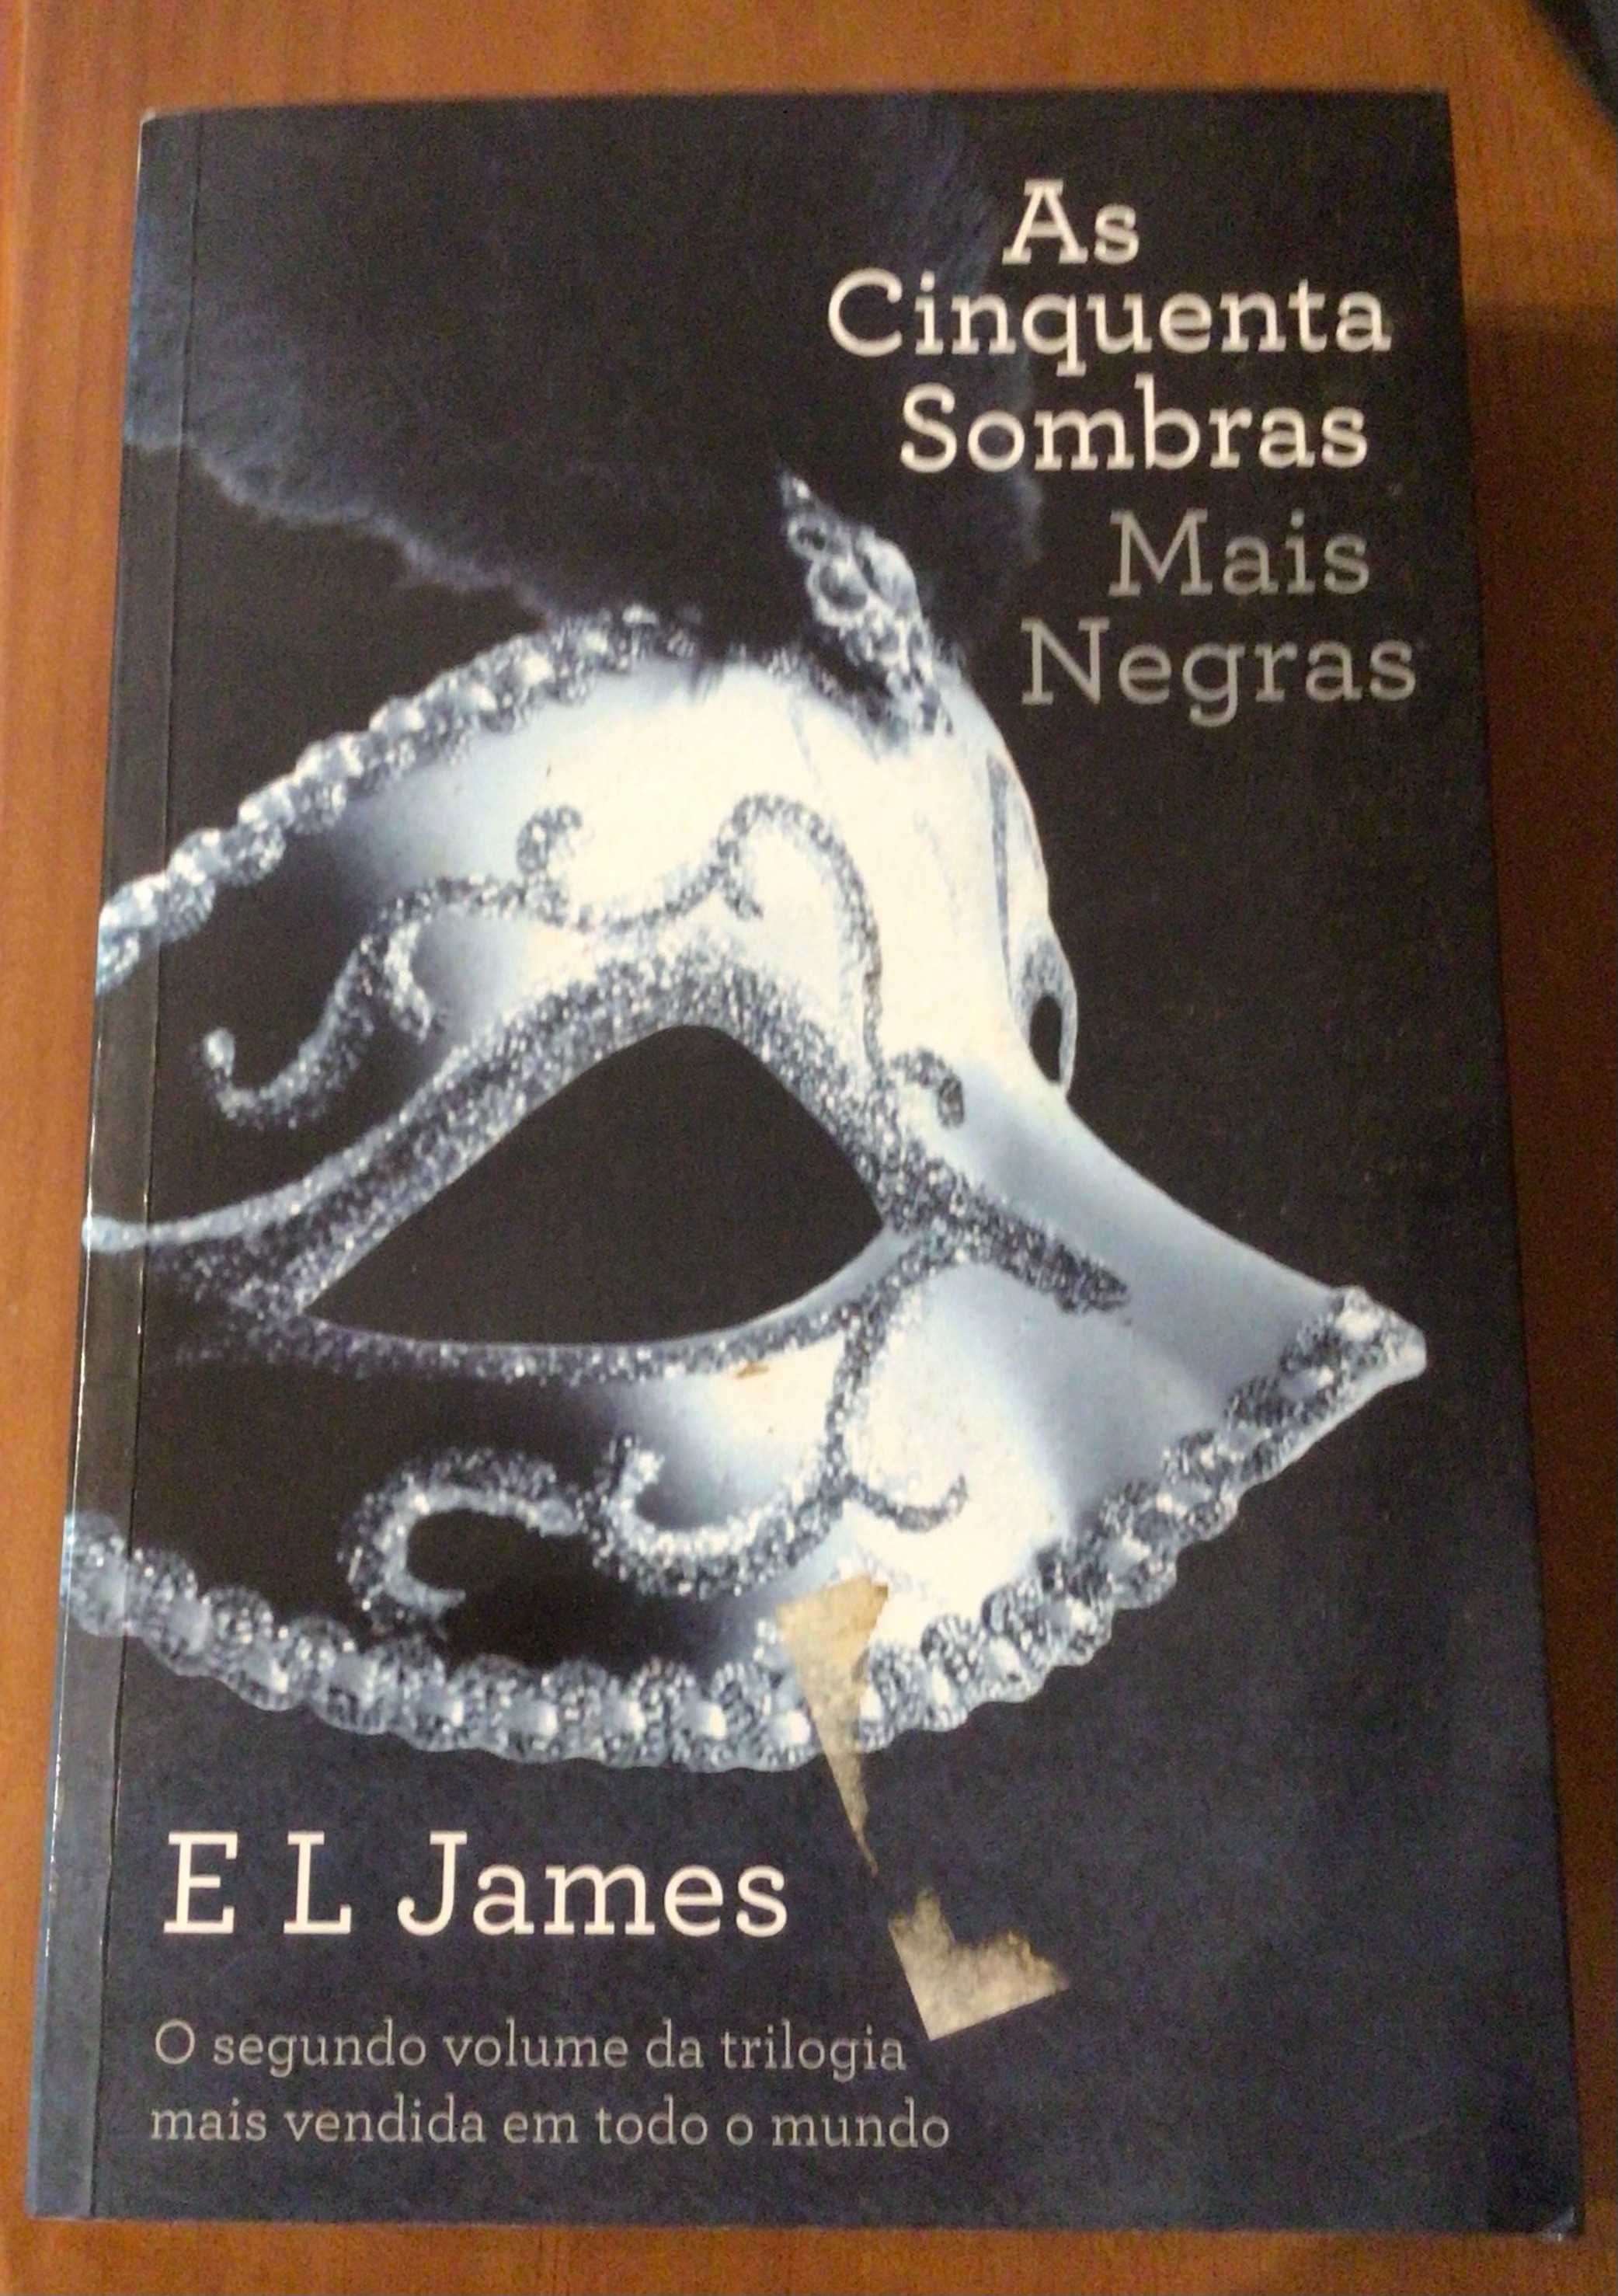 "As Cinquenta Sombras de Grey" - Vol 2, E L James (portes grátis)